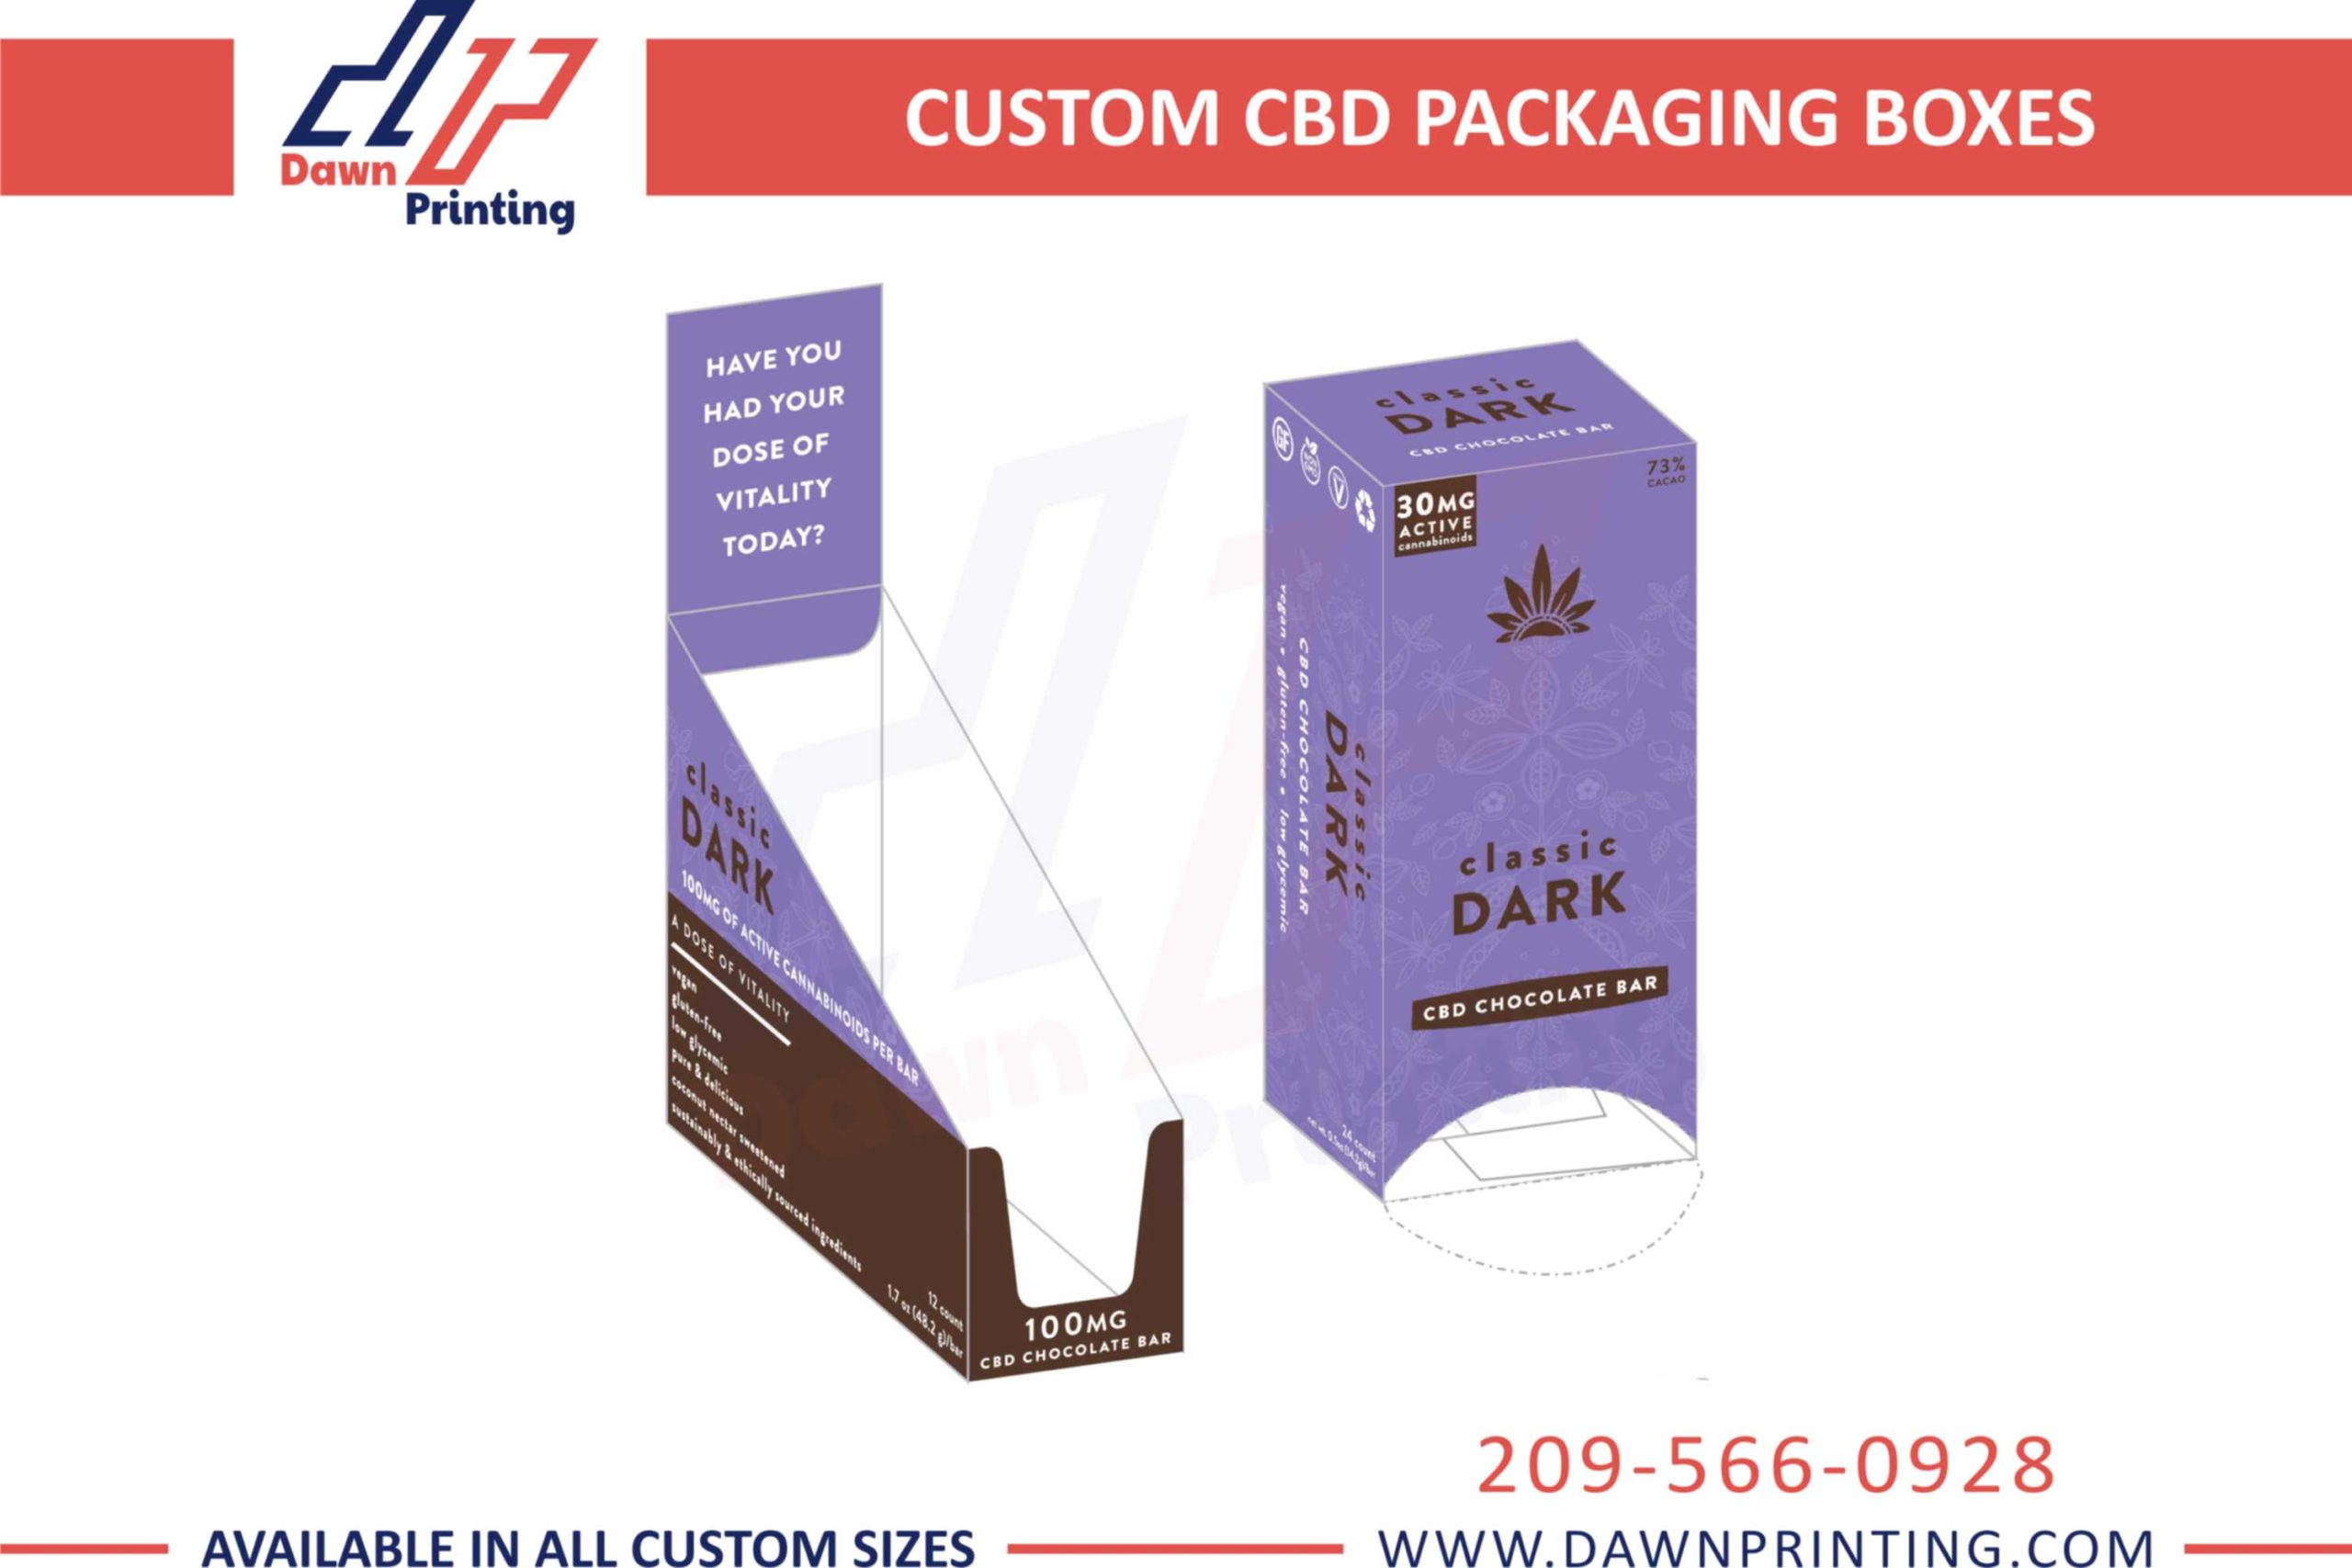 custom cbd packaging boxes by Dawn Printing